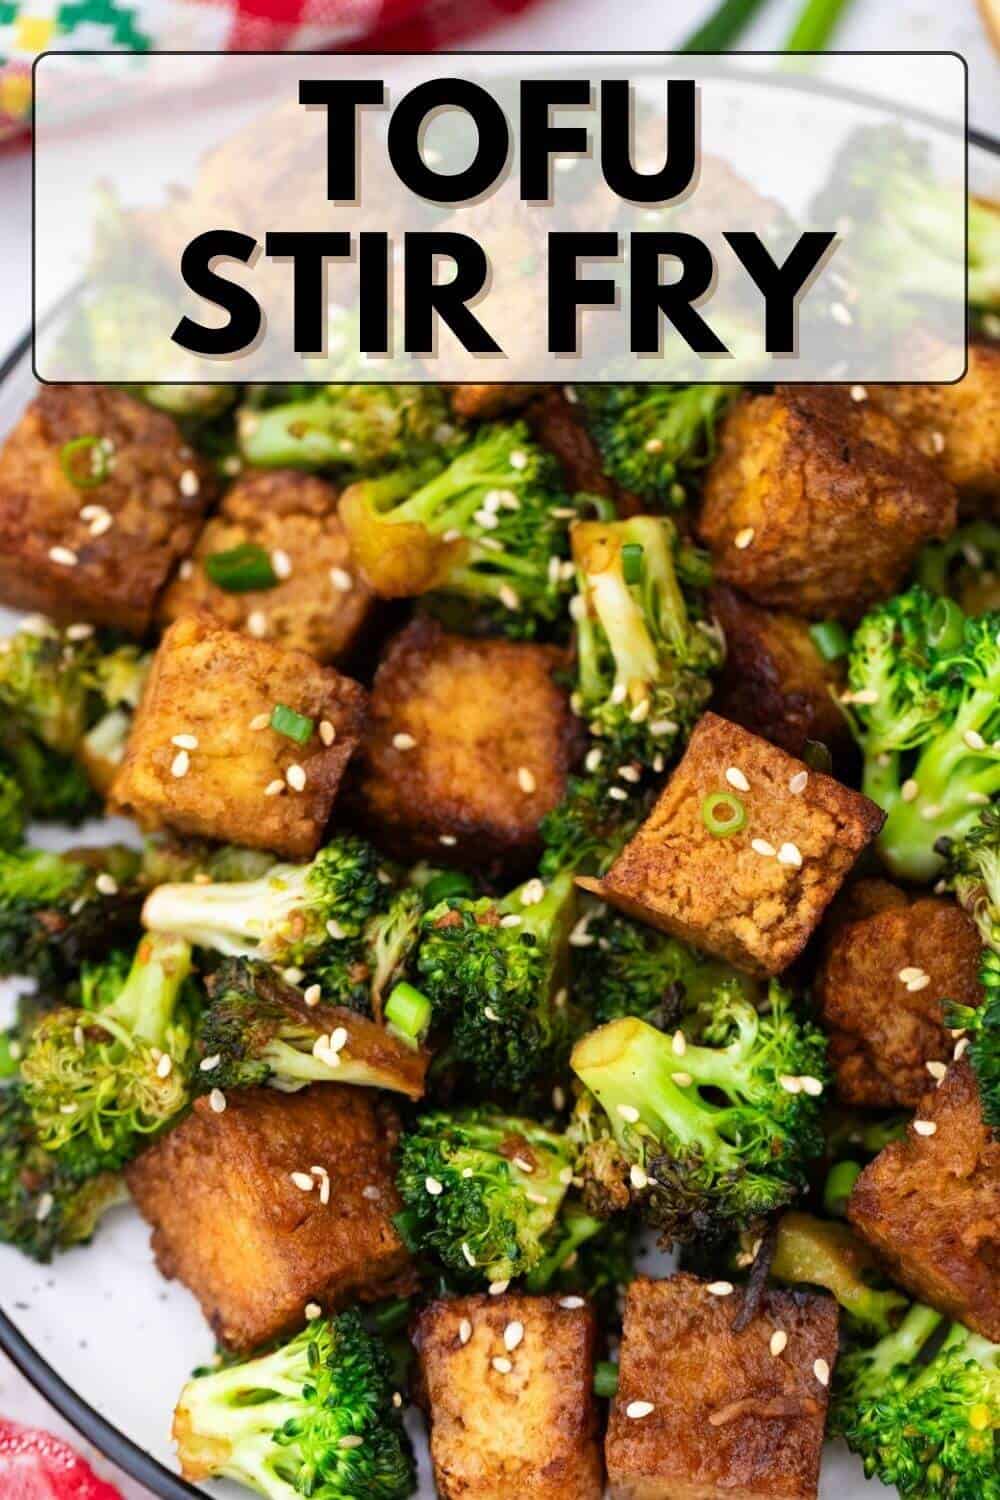 Tofu stir fry on a plate with broccoli.